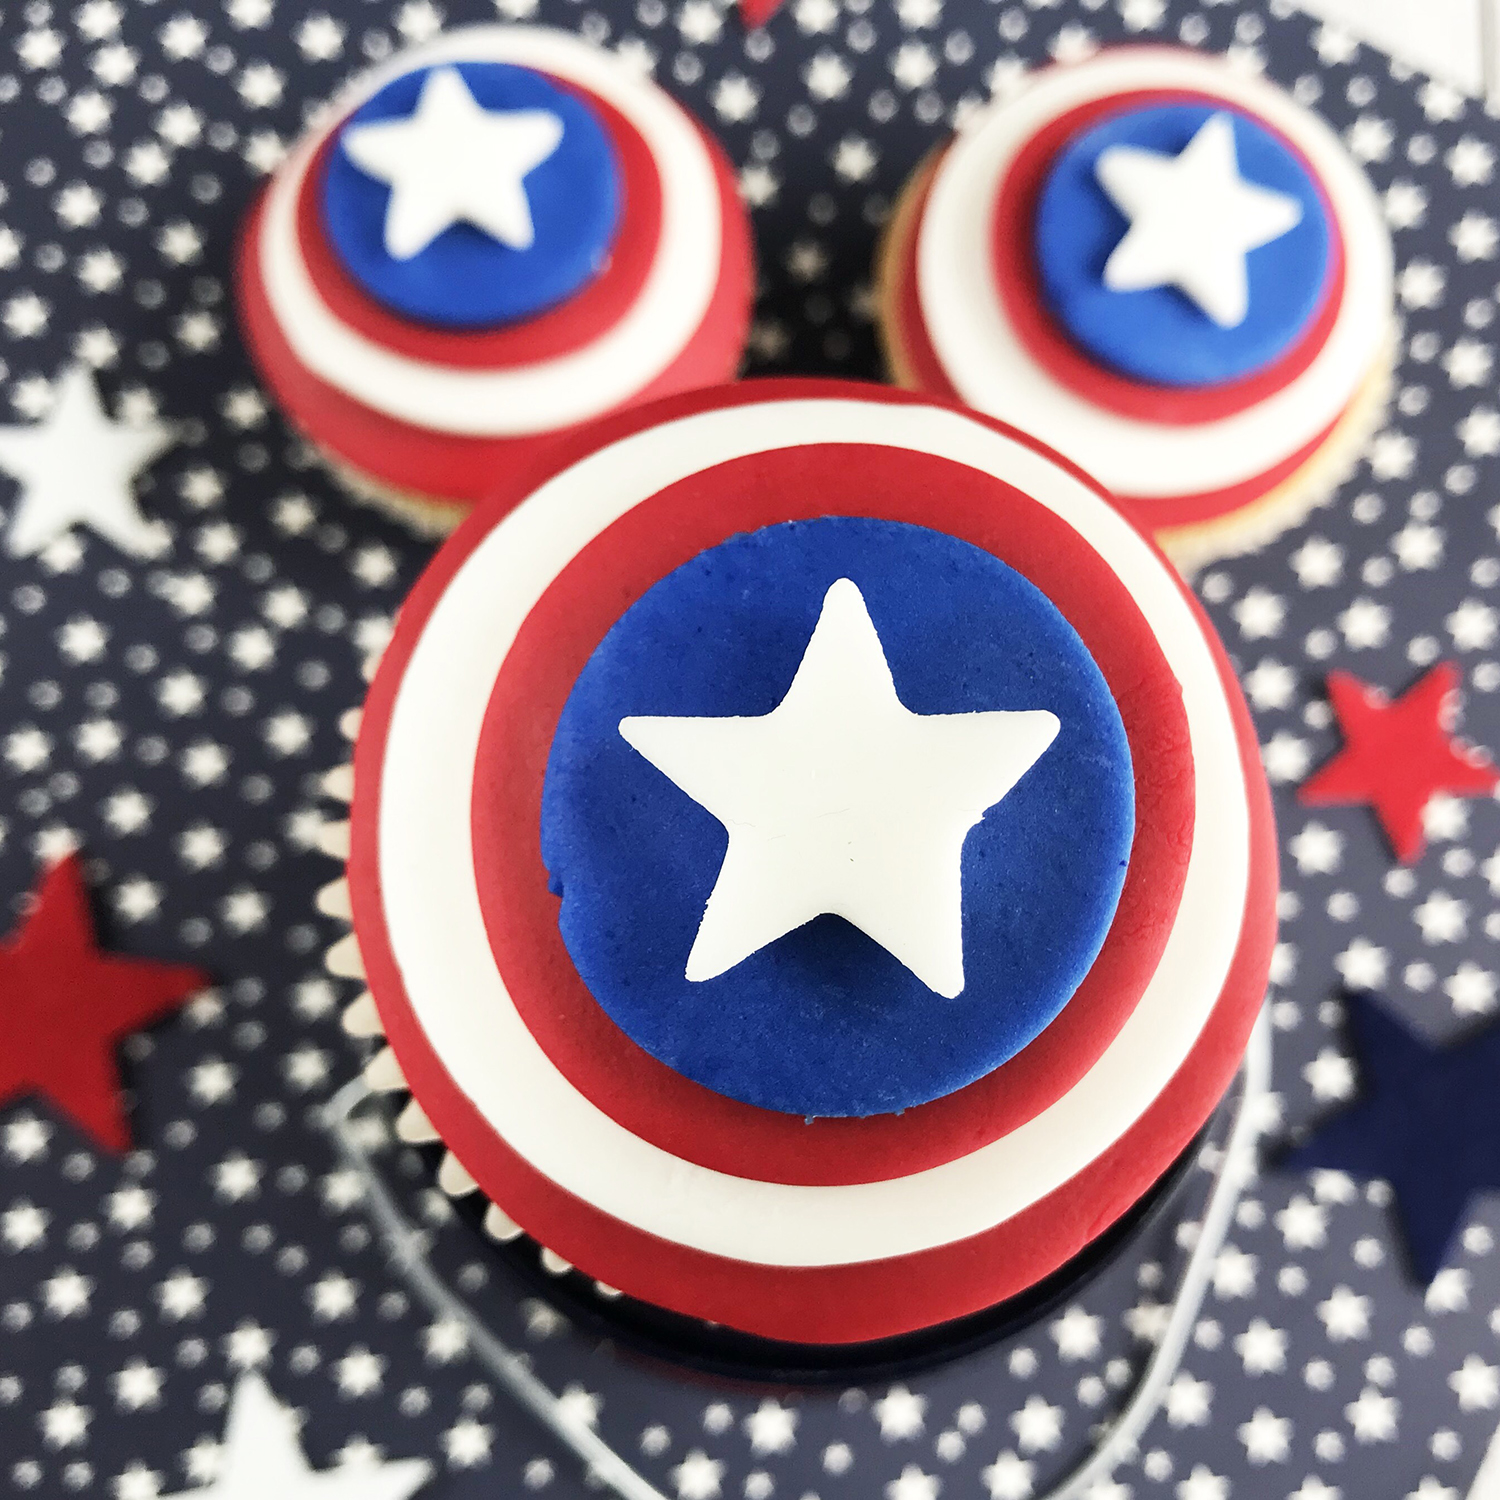 Top Captain America Cakes - CakeCentral.com